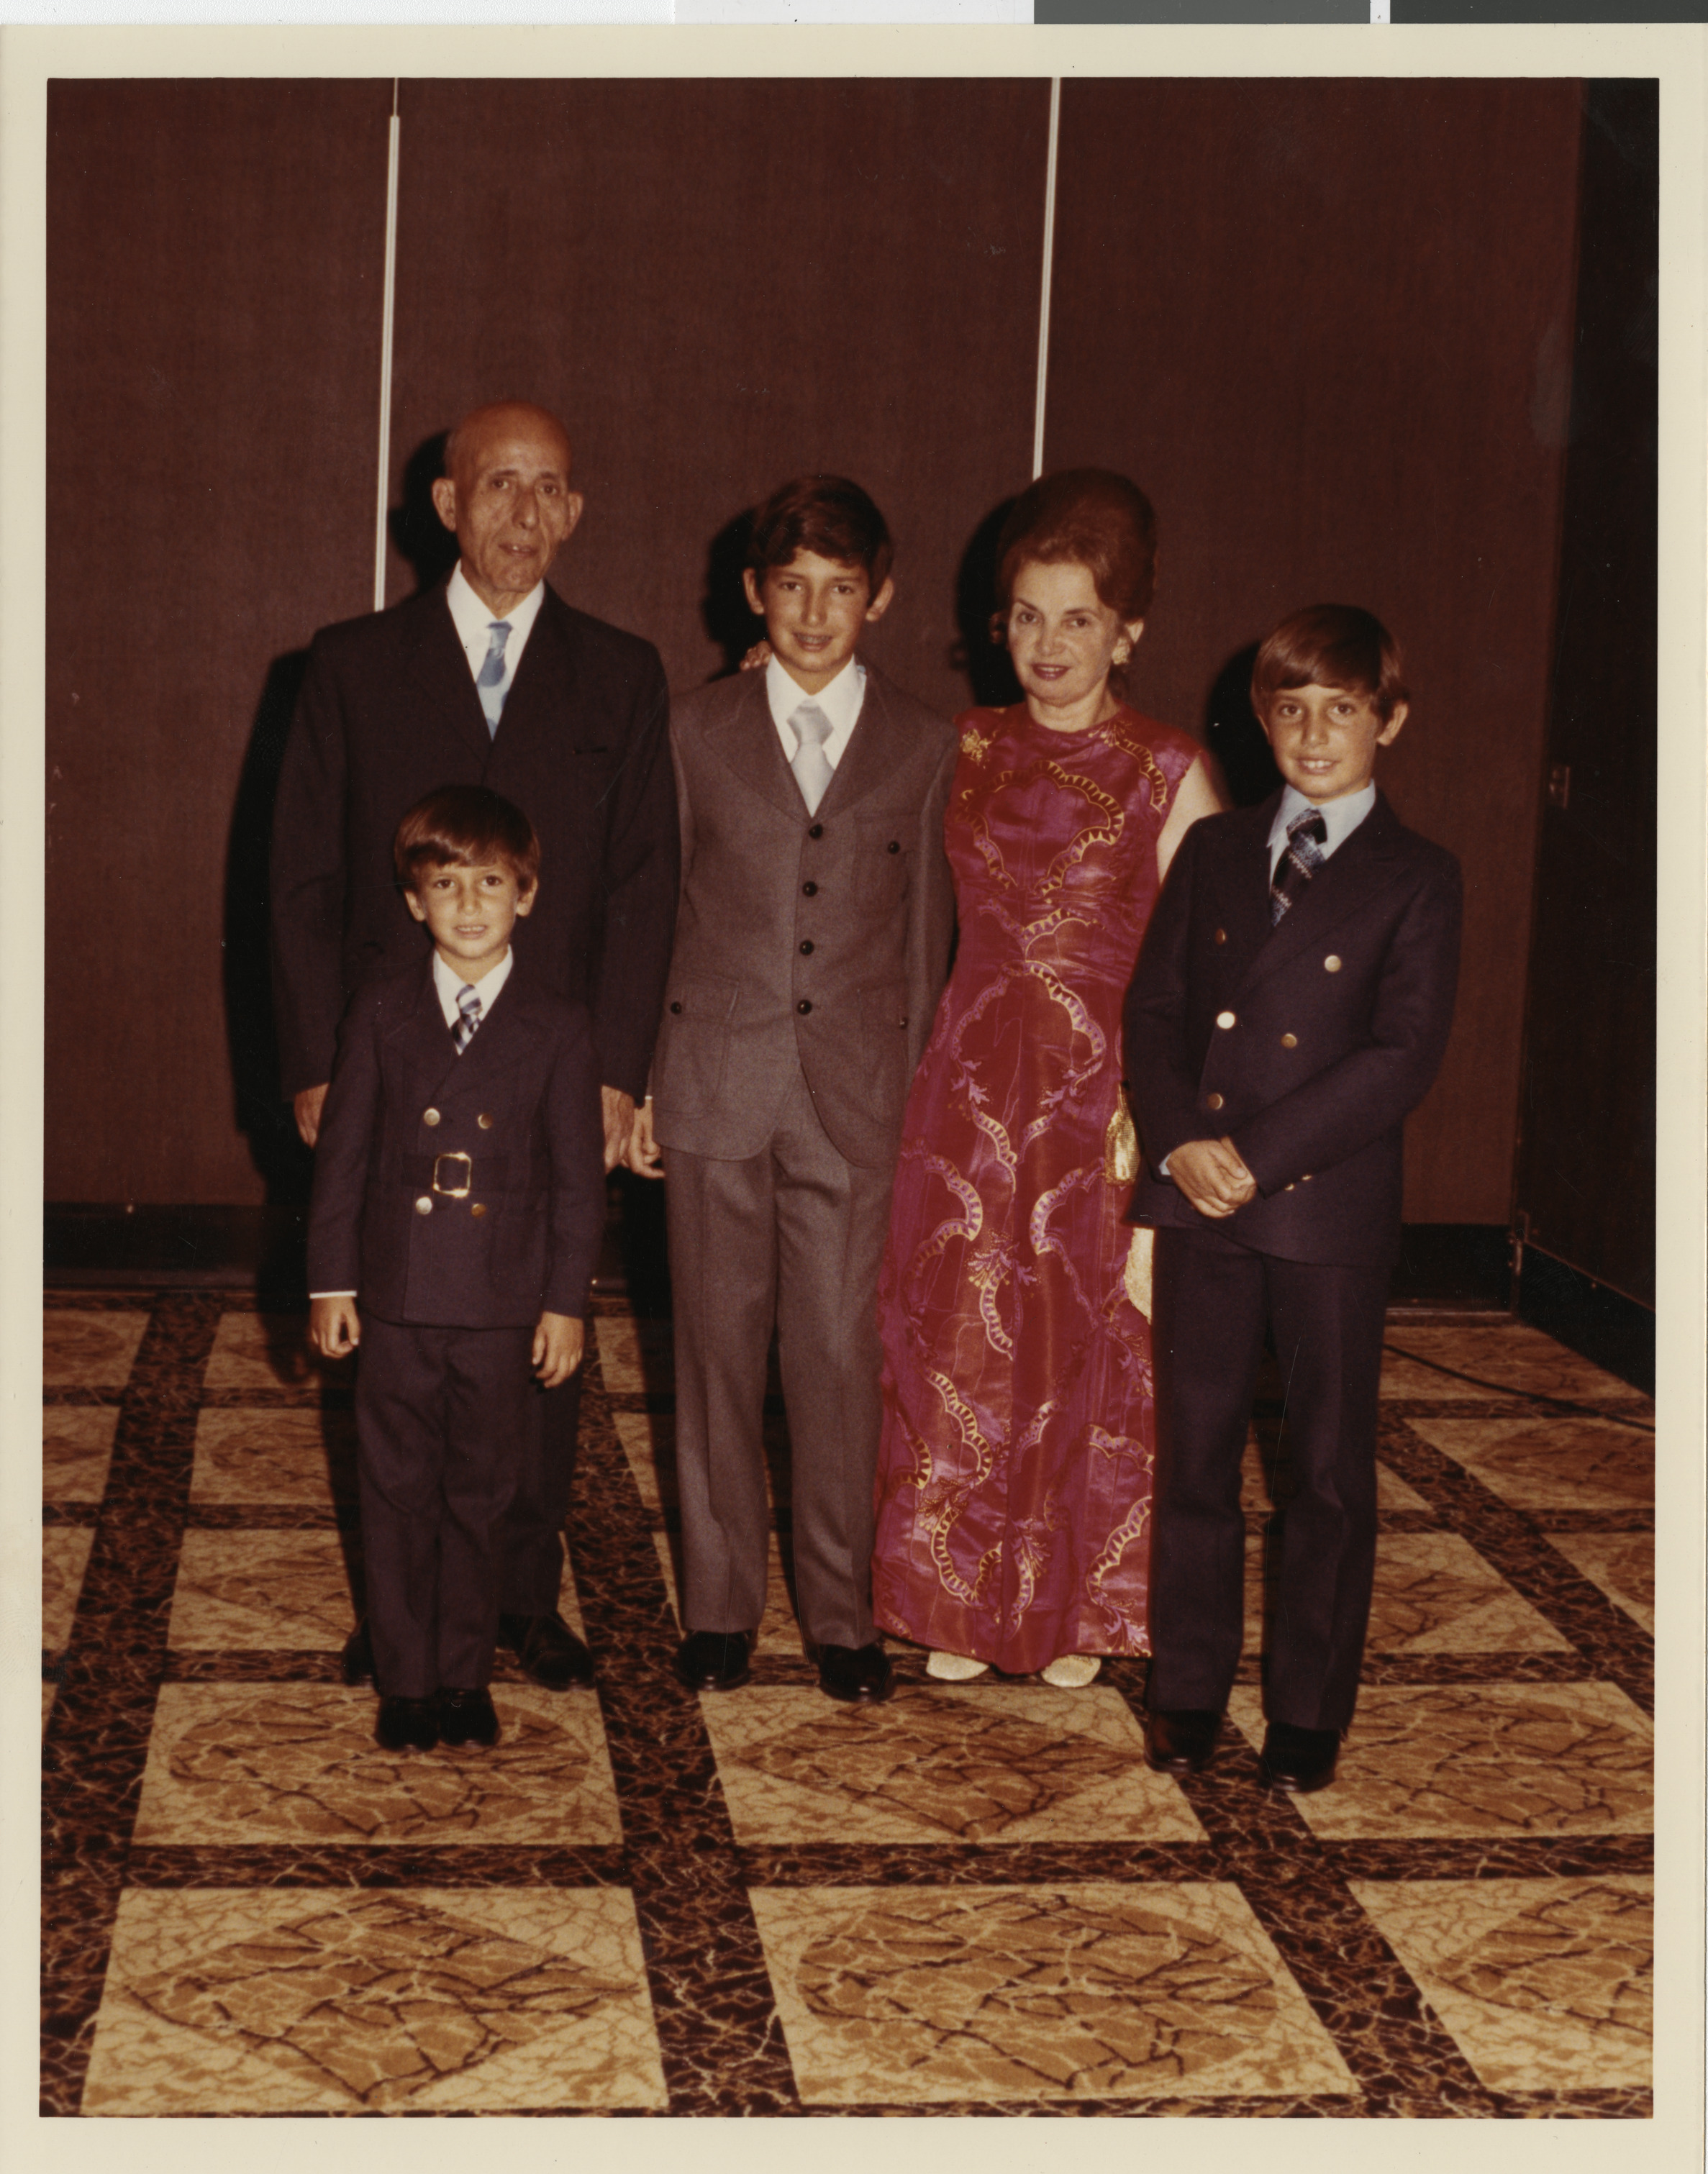 Molasky family photographs, image 47